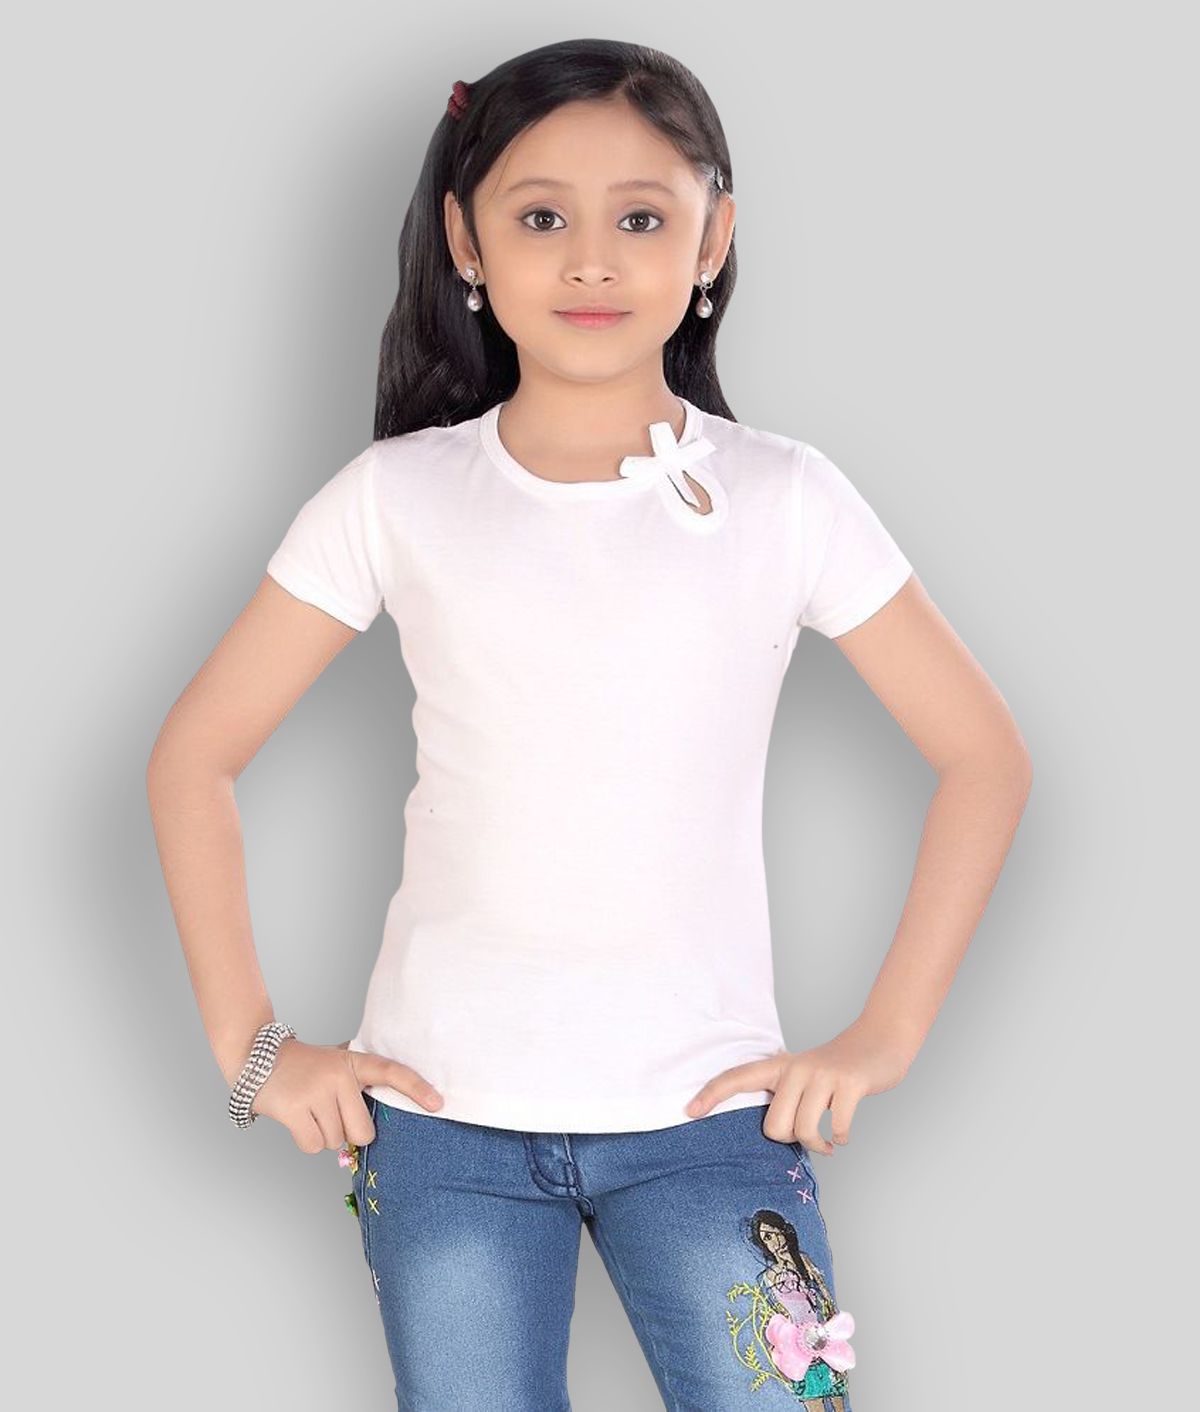     			Sini Mini - White Cotton Girl's T-Shirt ( Pack of 1 )